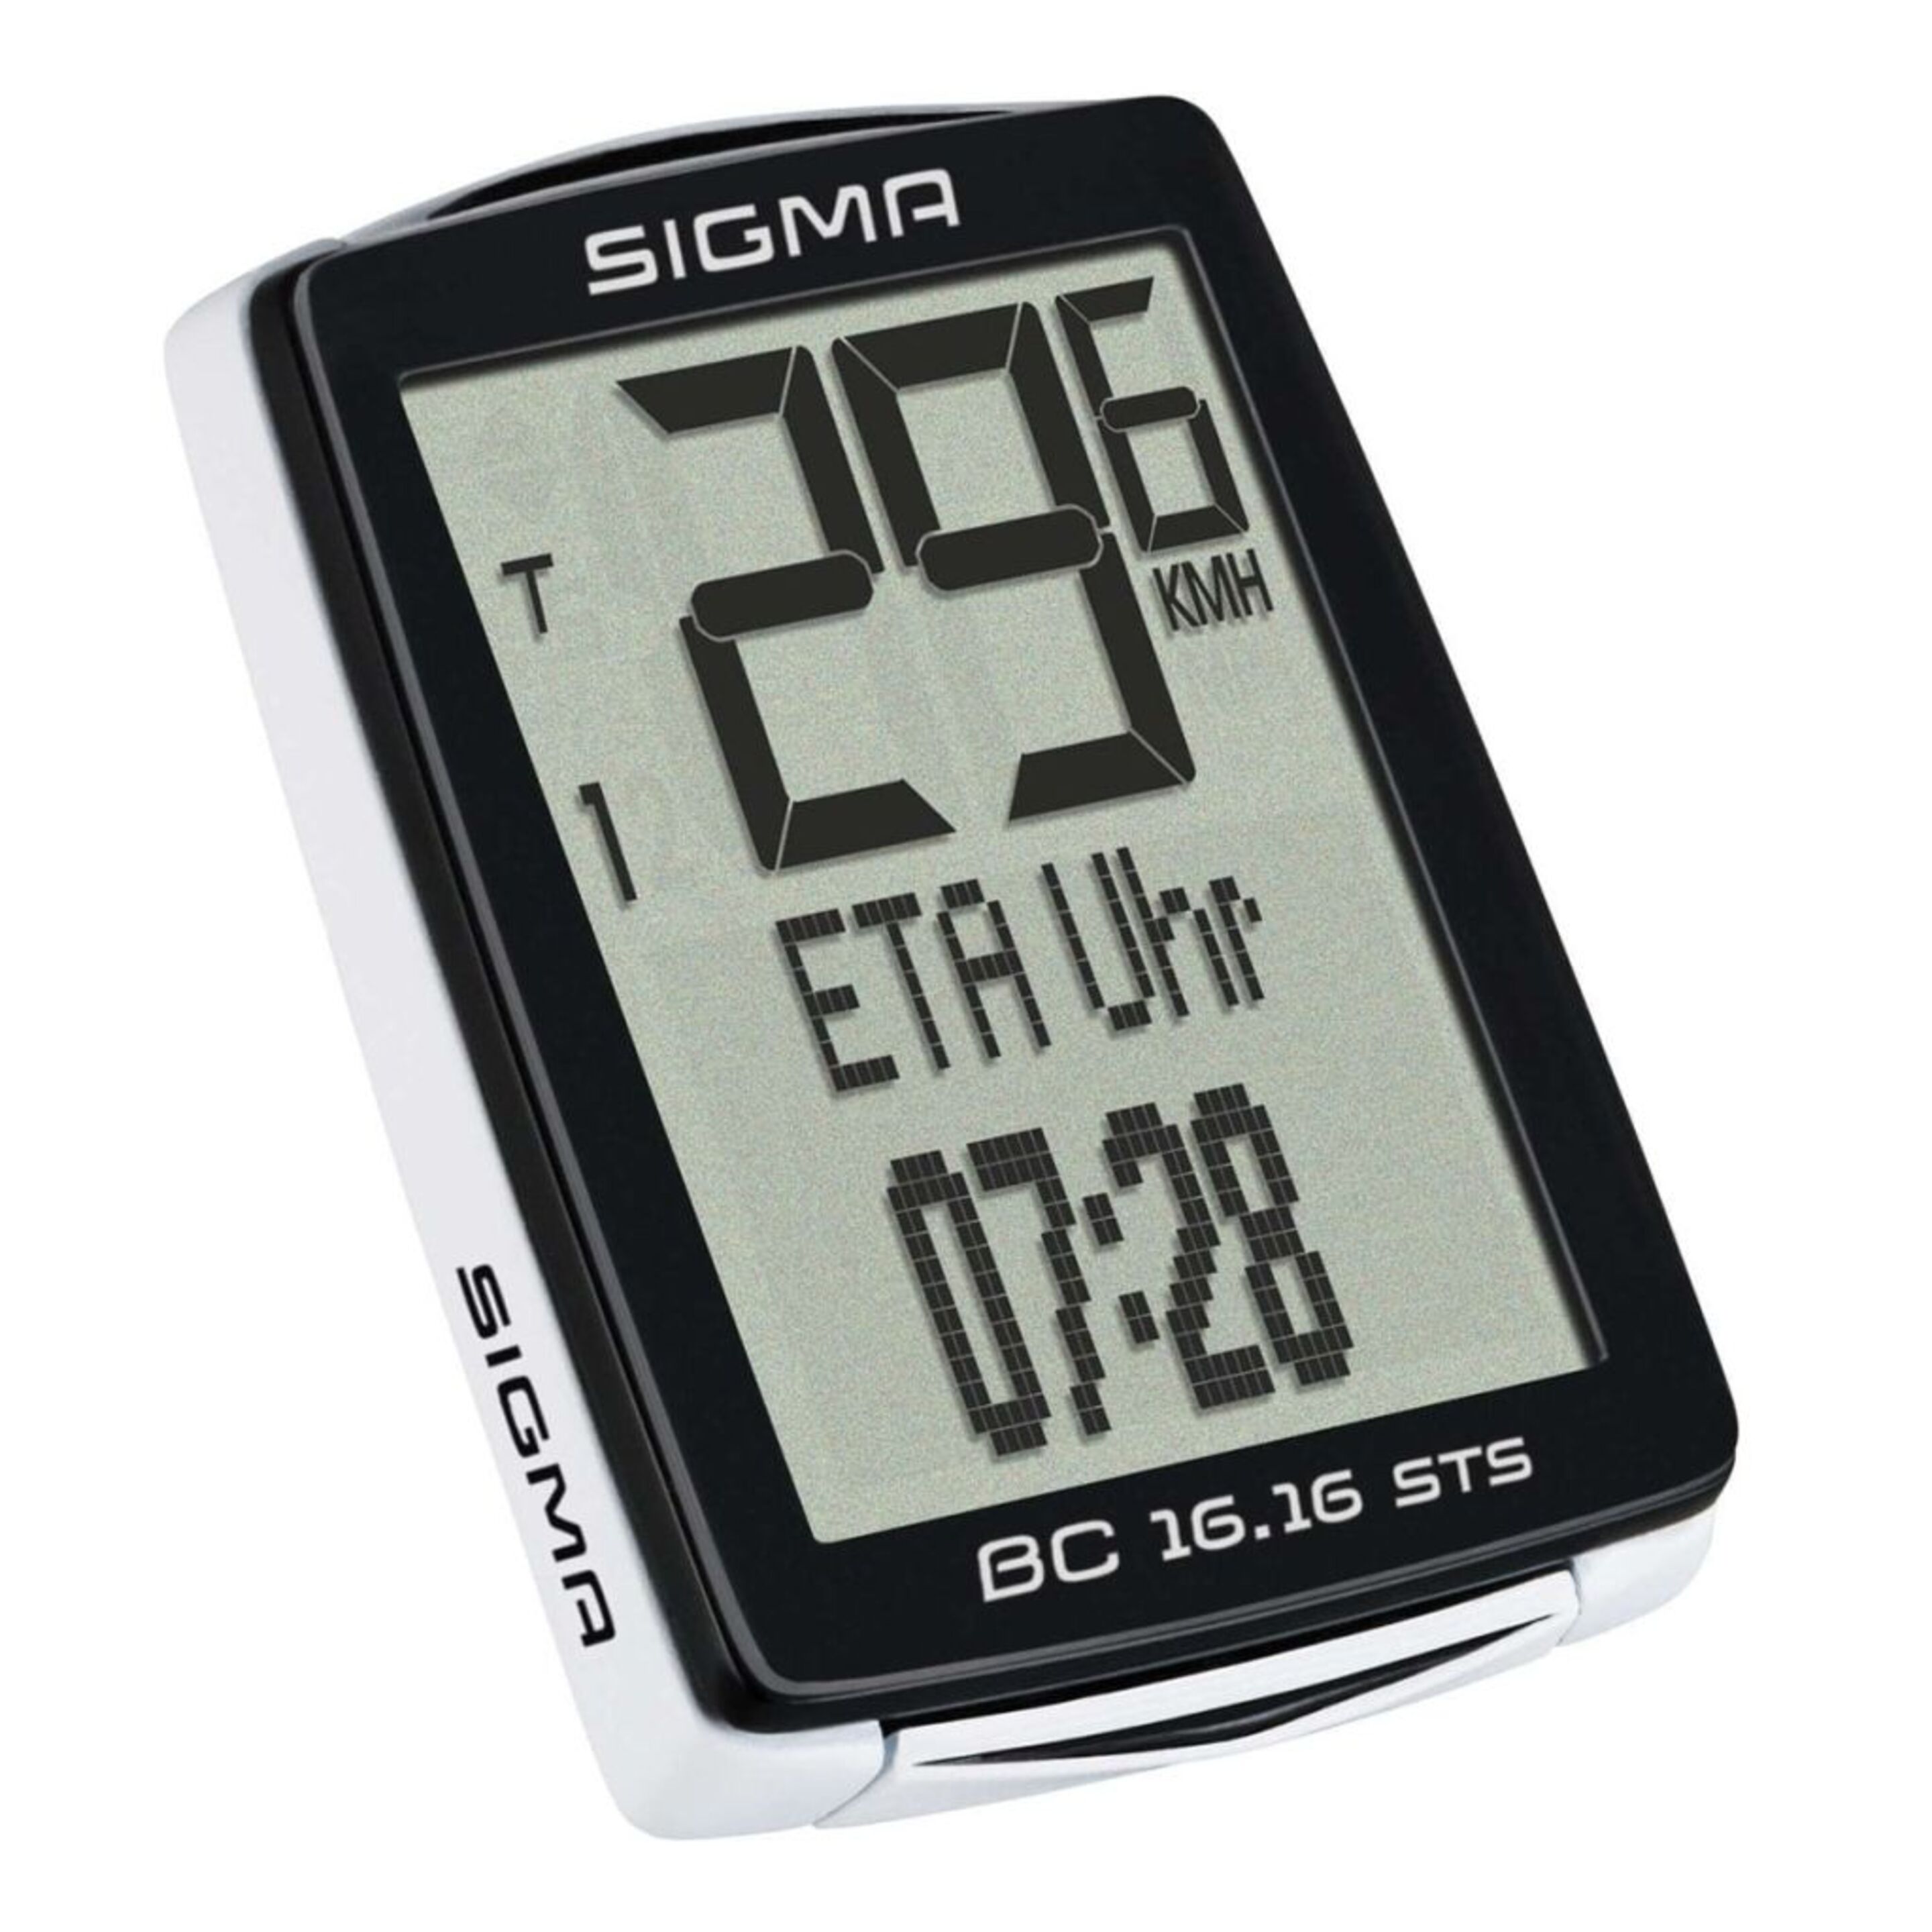 Cuentakilómetros Sigma Bc 16.16 Sts - negro - 